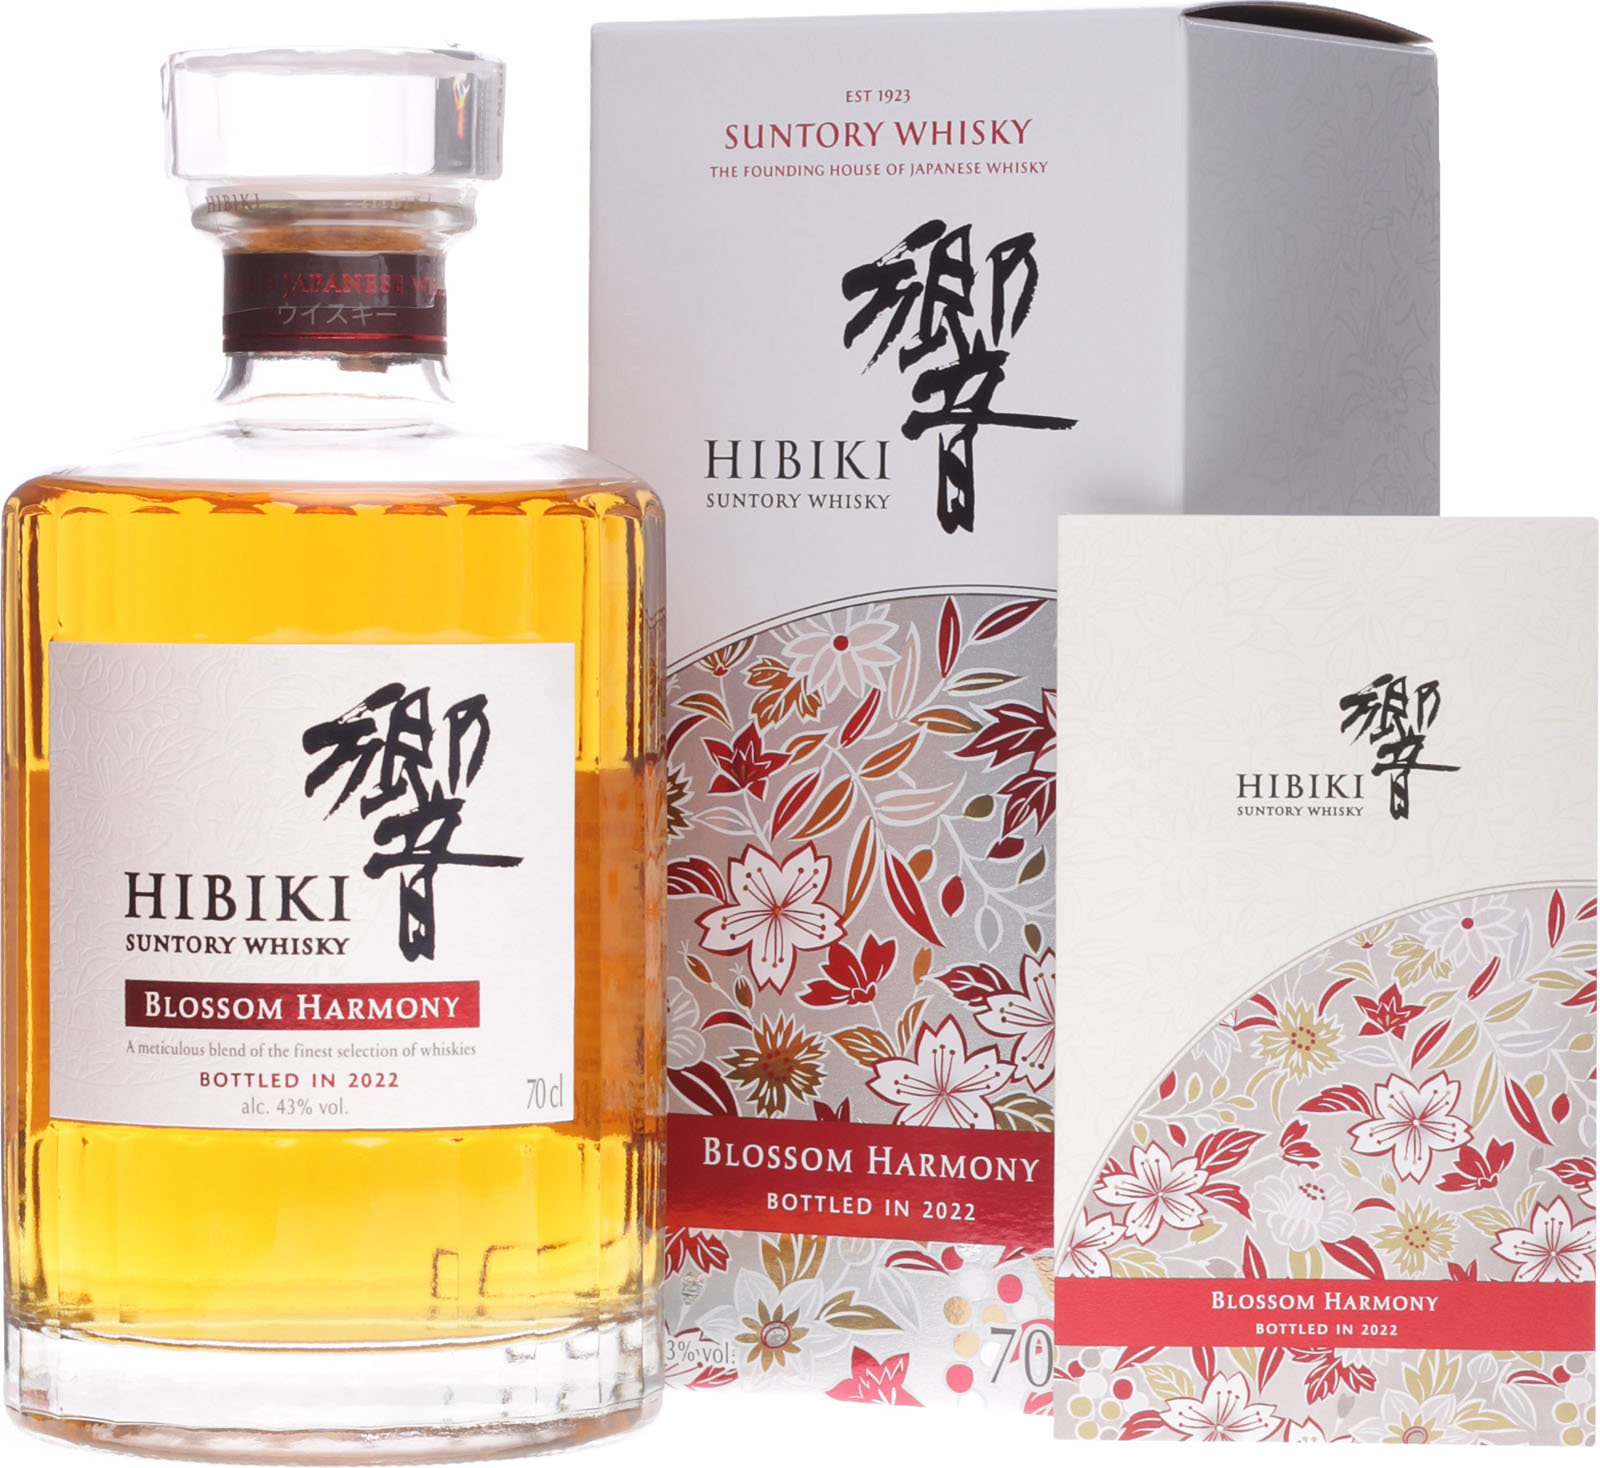 Suntory Whisky Hibiki Blossom Harmony 2022 43% Vol. 0,7l in Giftbox, 1.447 kilograms, 1 item